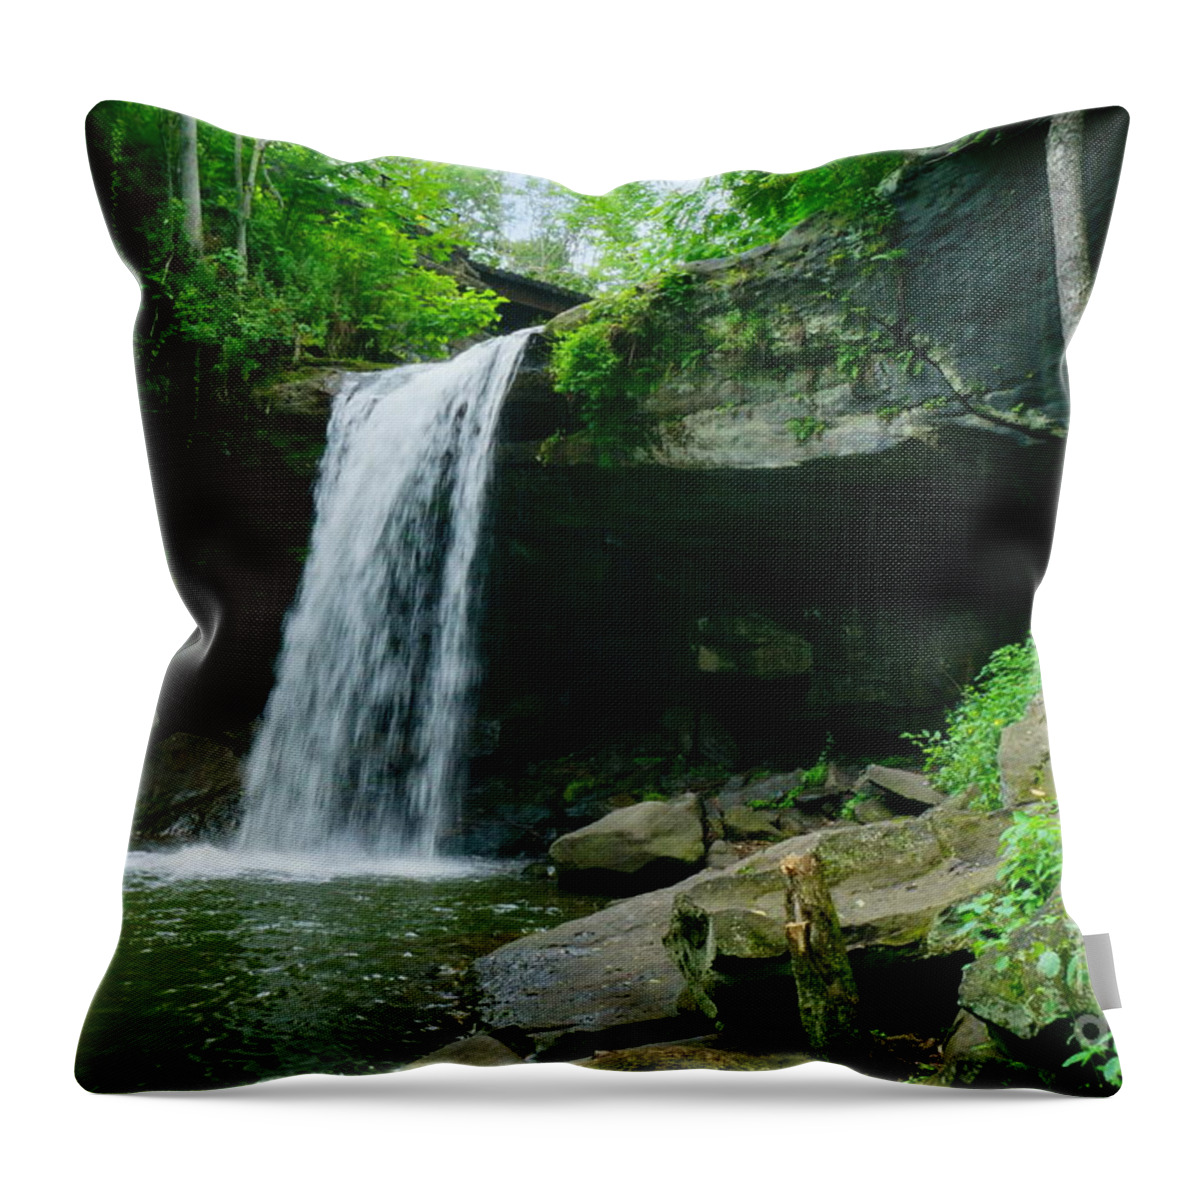 Pittsburgh Throw Pillow featuring the photograph Buttermilk Falls by Amanda Jones